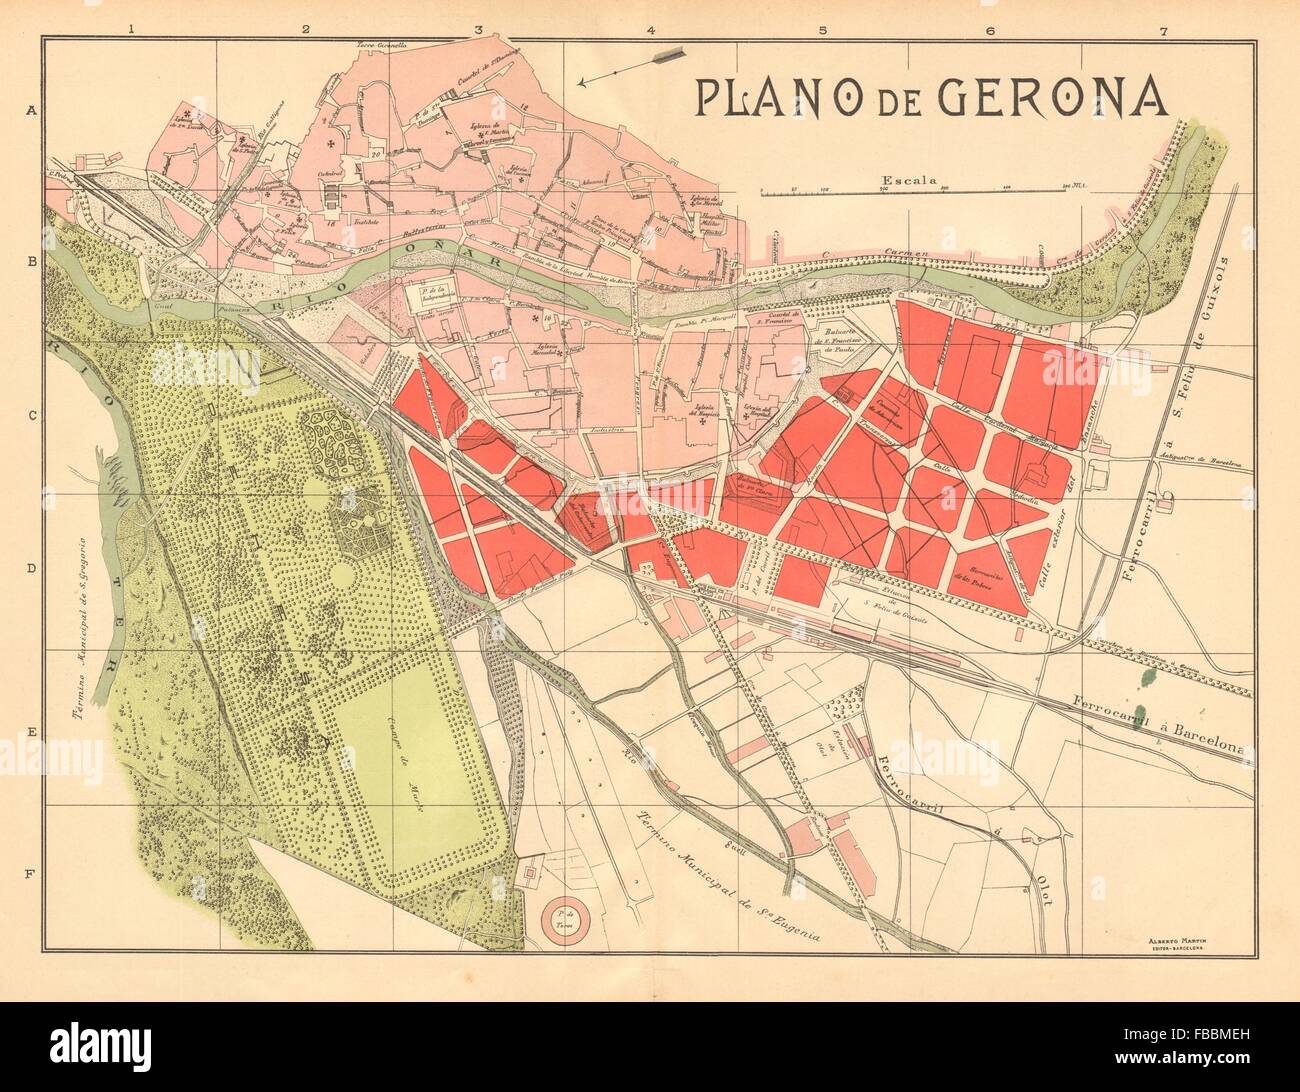 Girona City Map